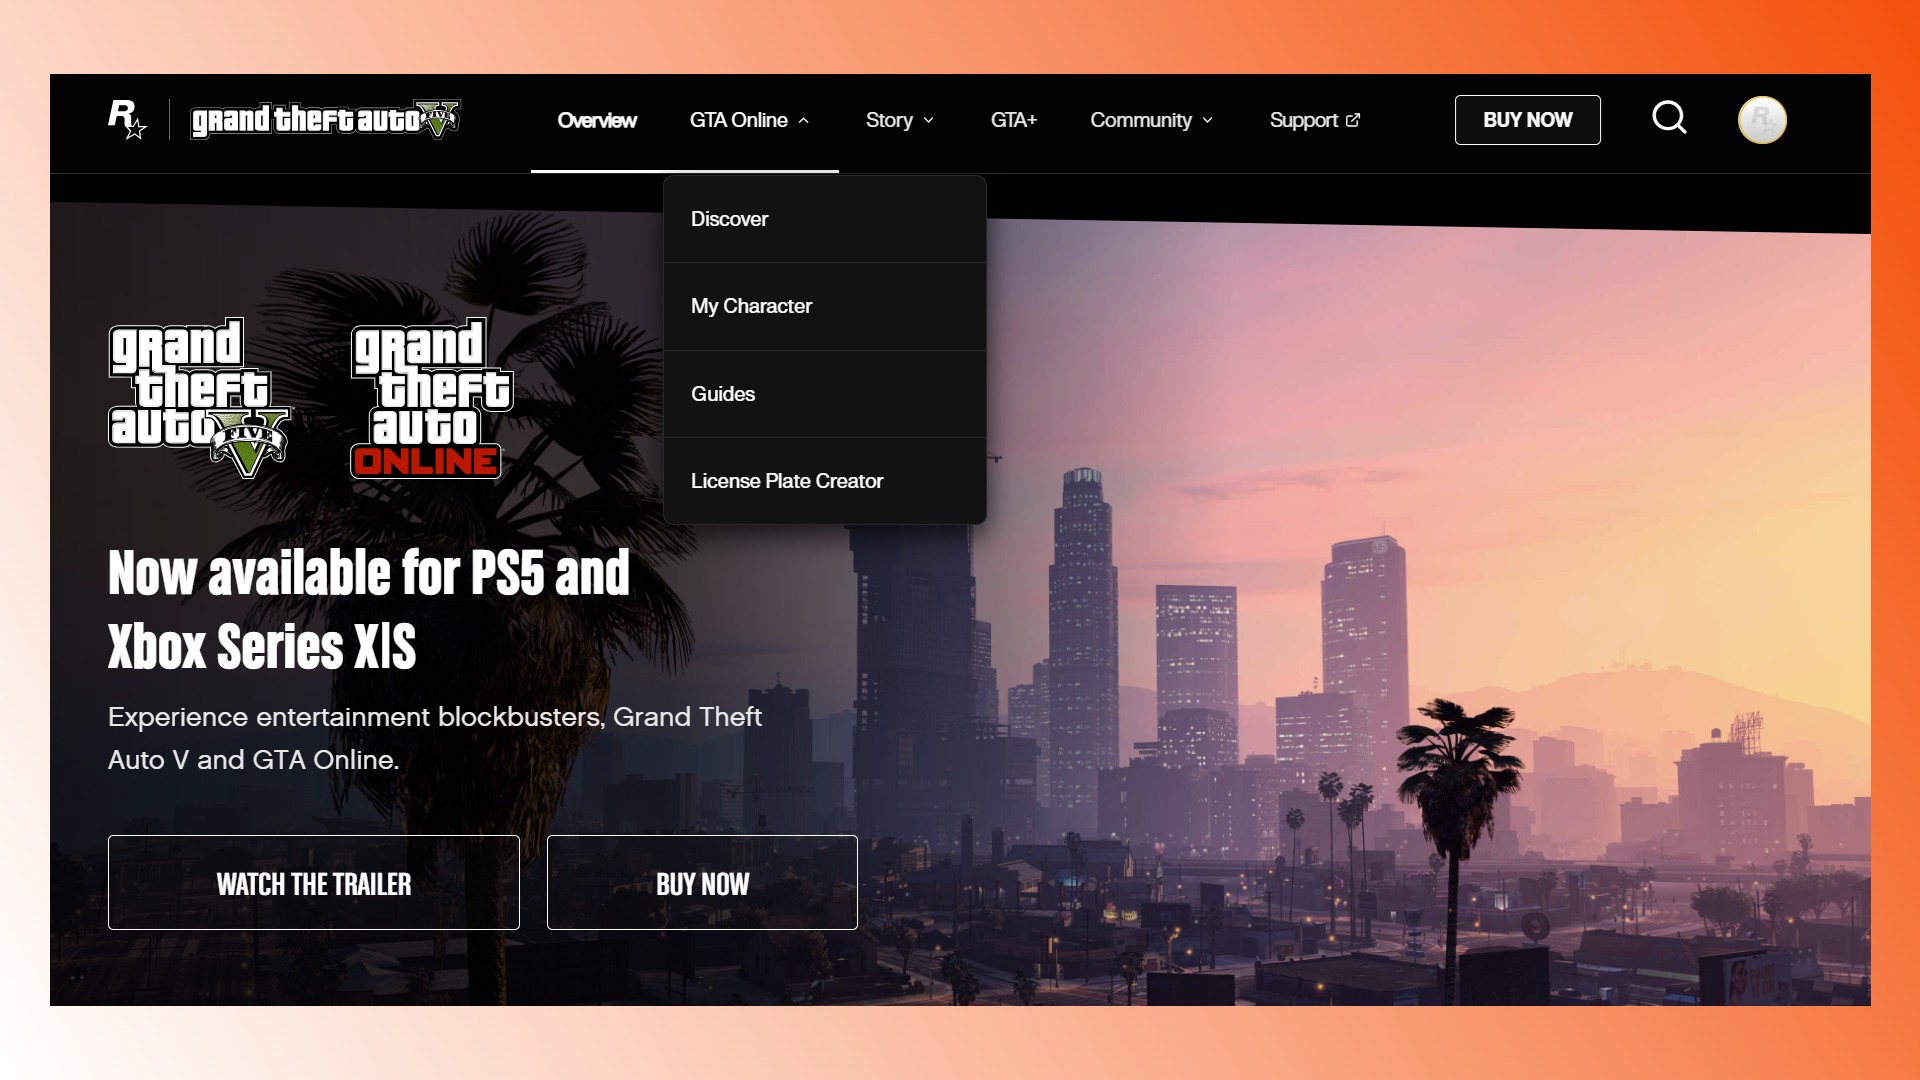 GTA 6 Rockstar Social Club: Die Rockstar Social Club-Seite wurde vor Grand Theft Auto 6 neu gestaltet